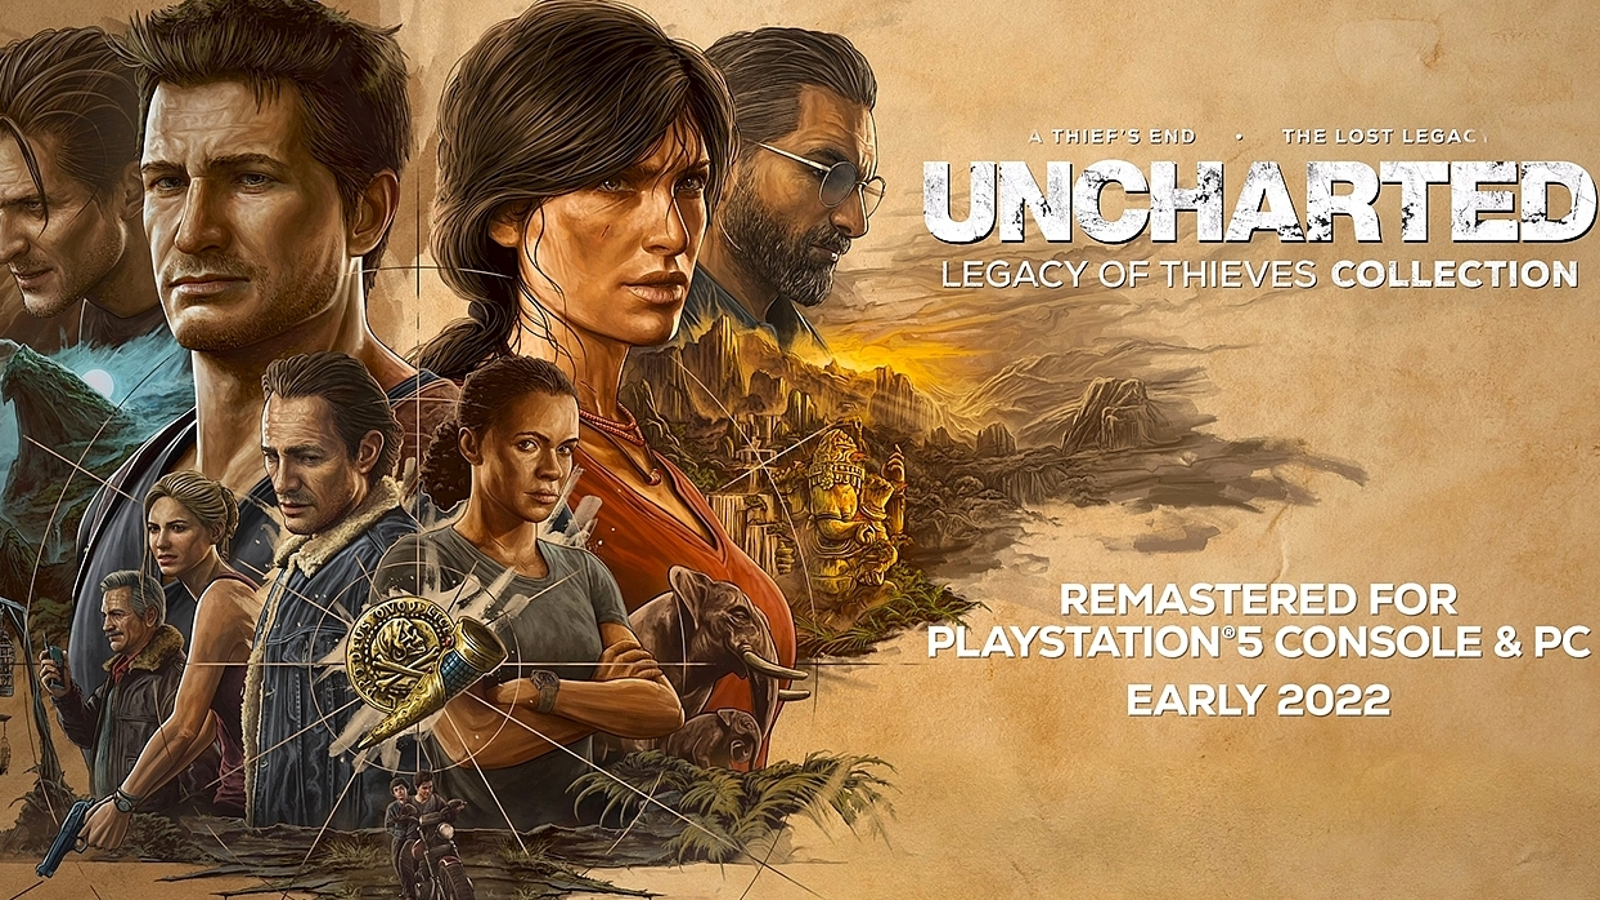 Uncharted – Filmes no Google Play